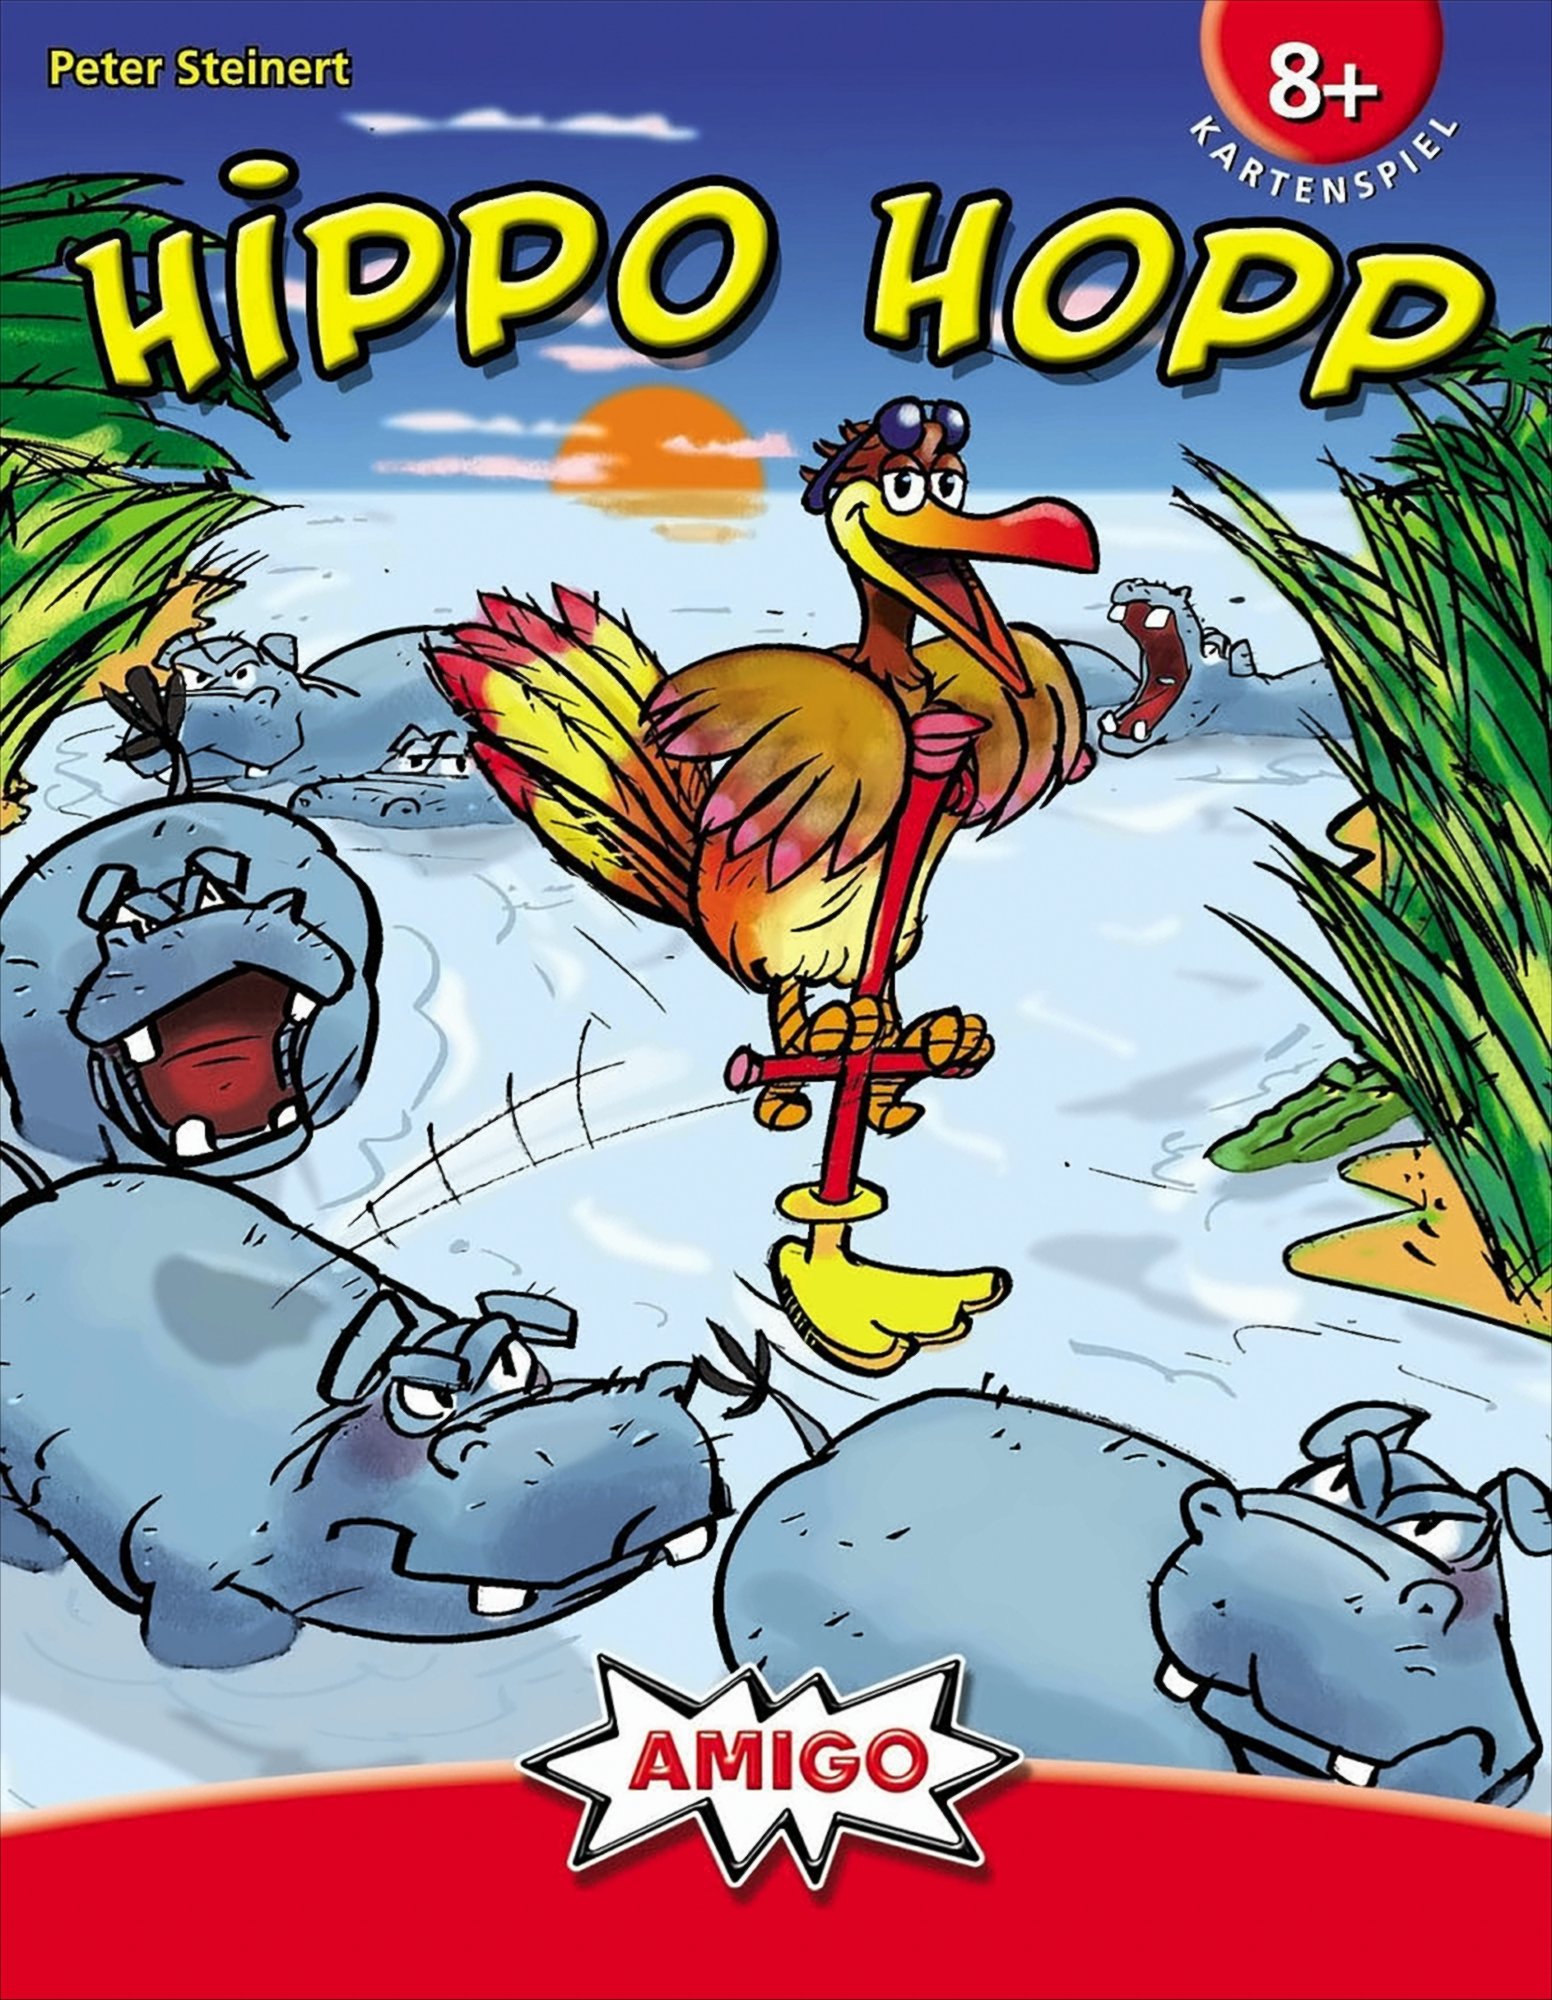 Hippo Hopp von Amigo S&F GmbH